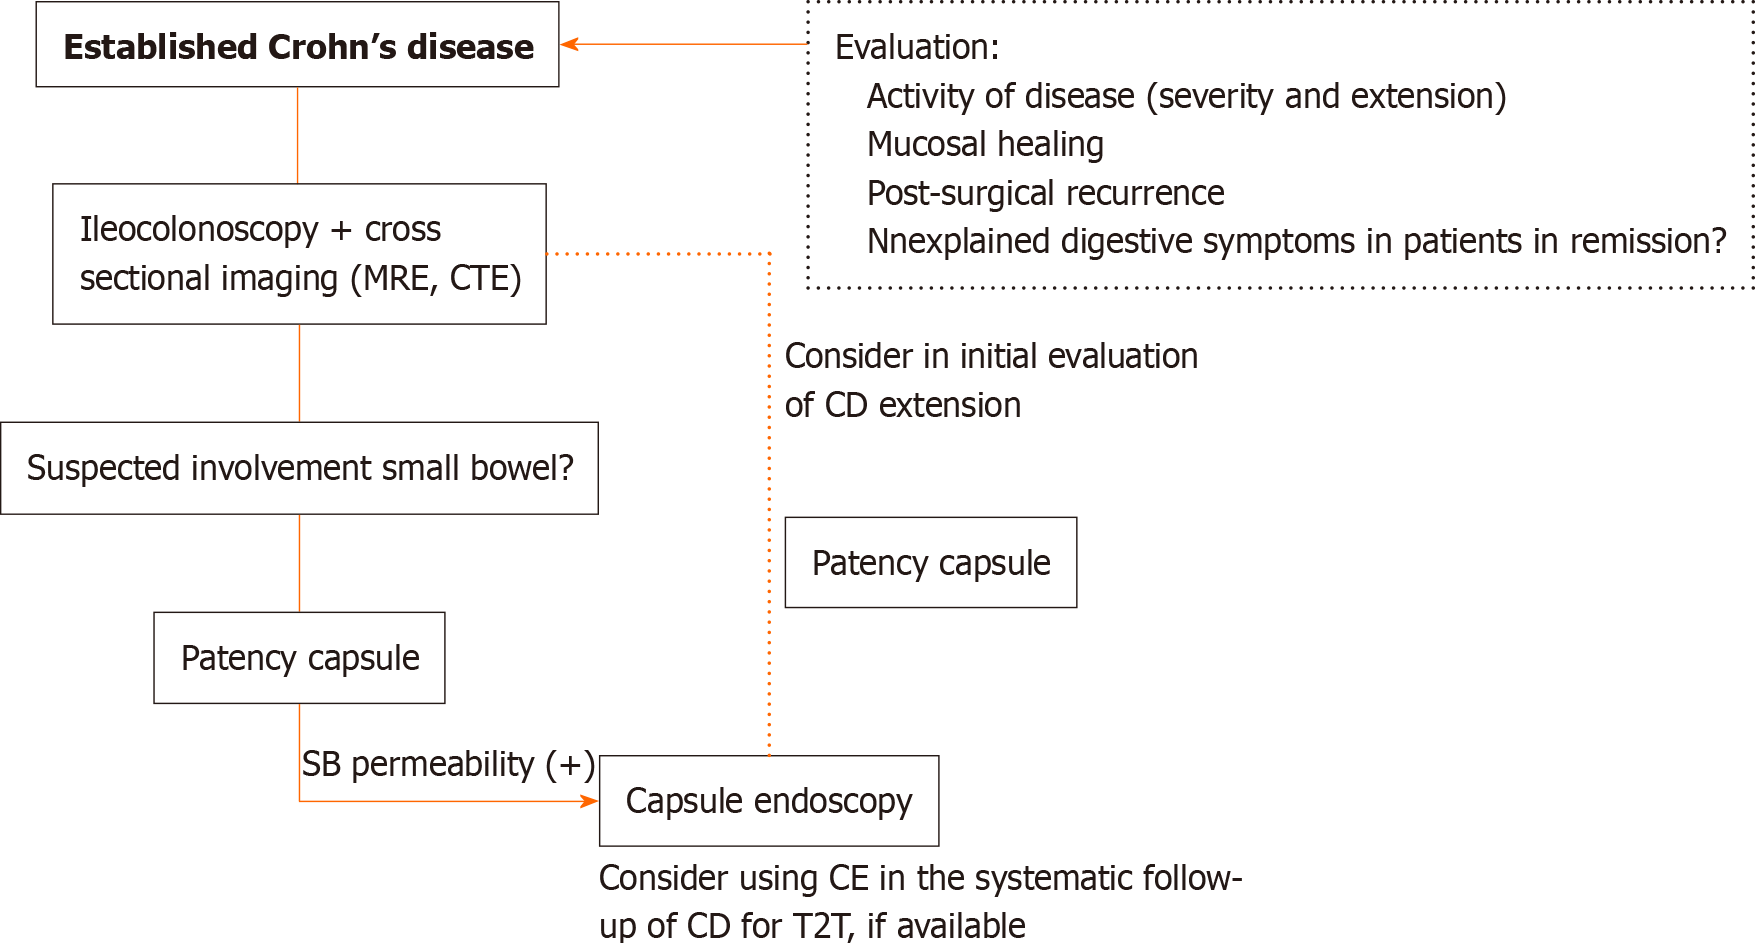 Capsule Endoscopy: Ulcerative Colitis Symptoms & Crohn's Disease Test